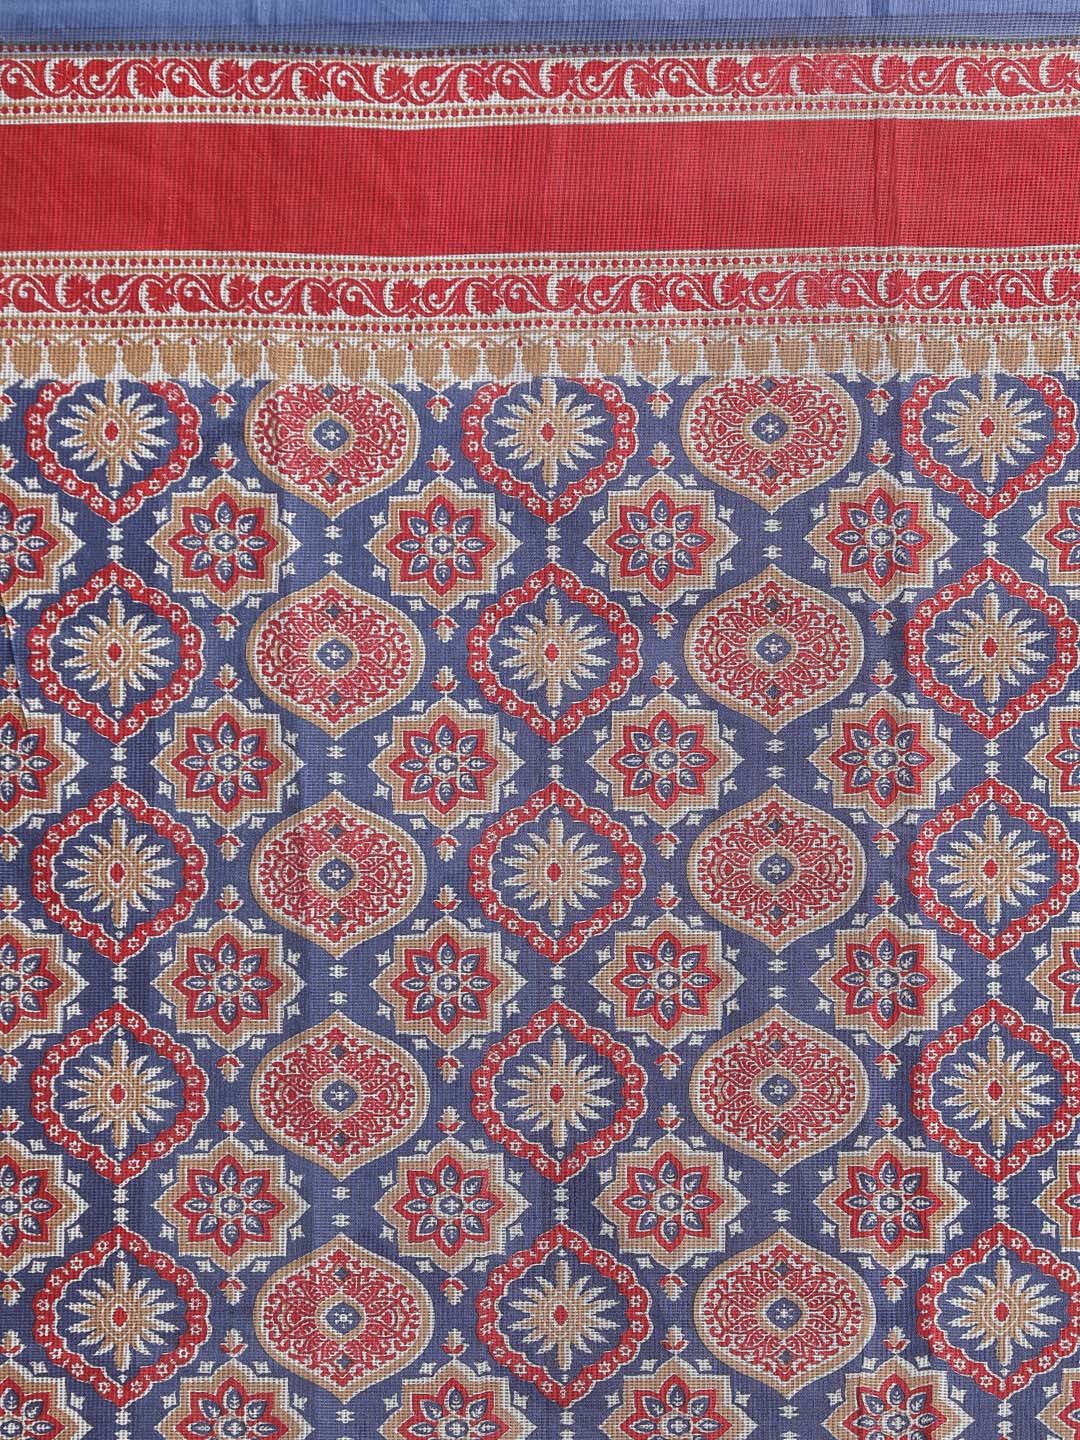 Indethnic Printed Super Net Saree in Blue - Saree Detail View